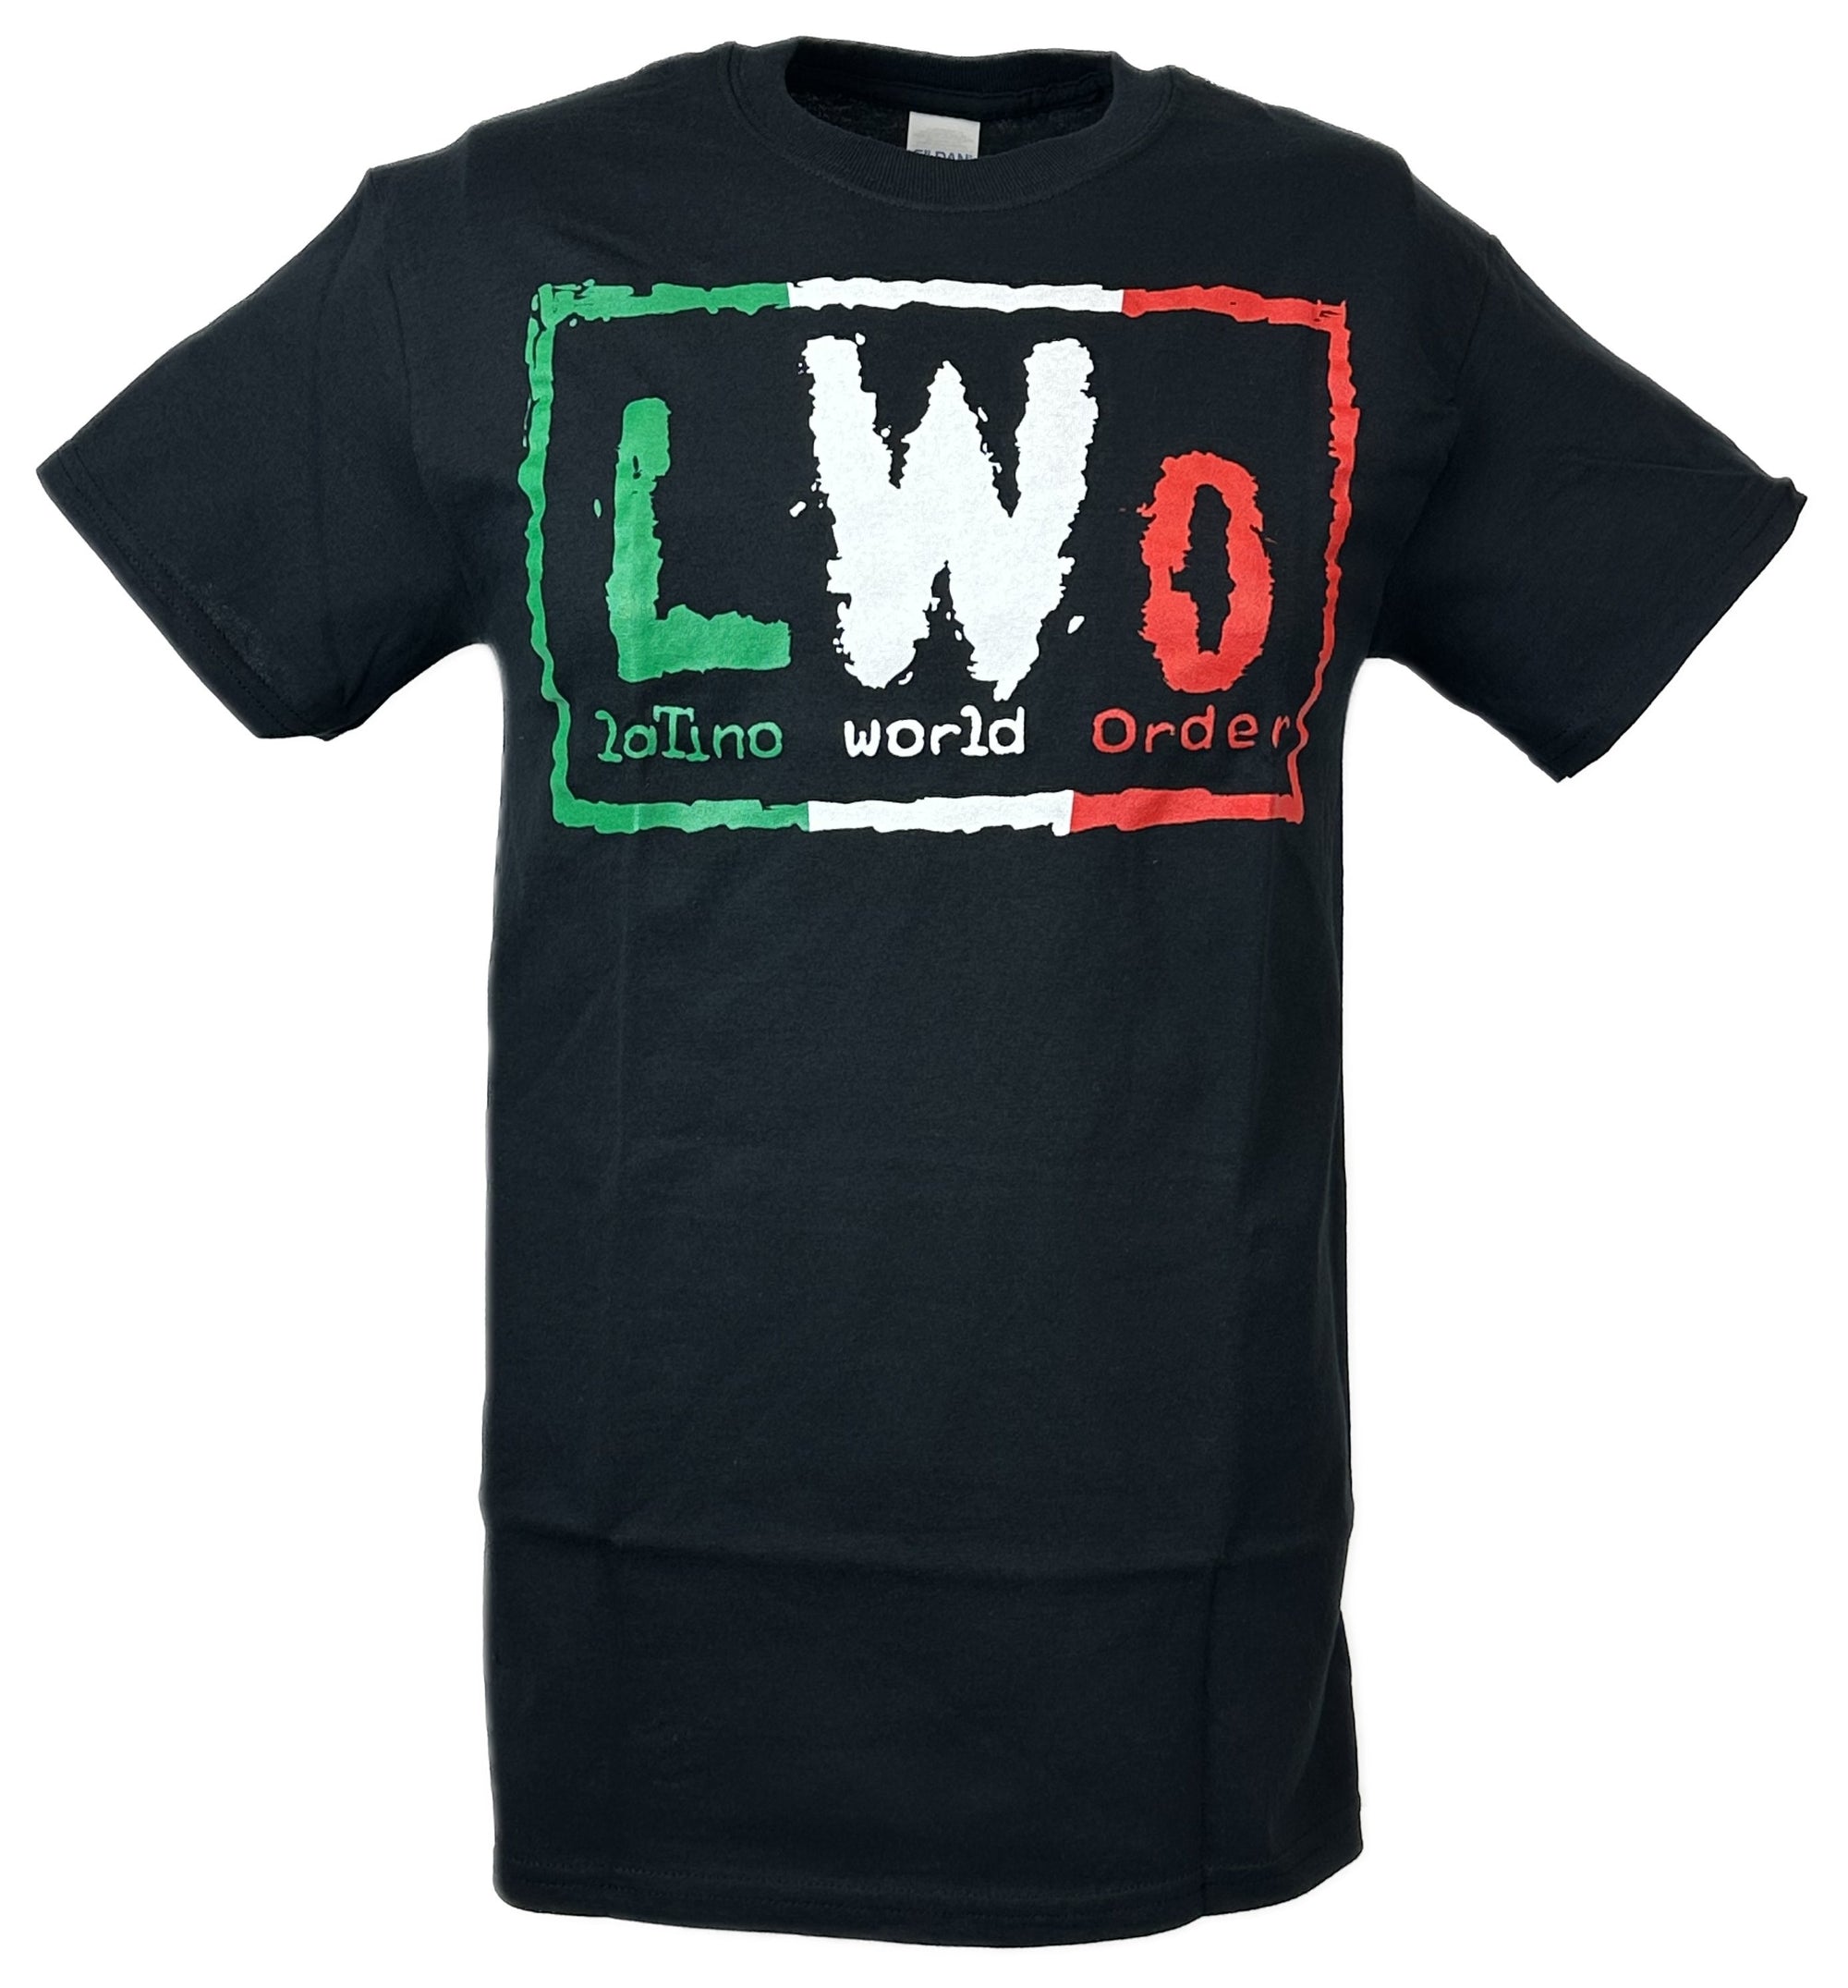 T-shirt Extreme Kids Youth Shirts Black Boys Order World Wrestling Latino - LWO